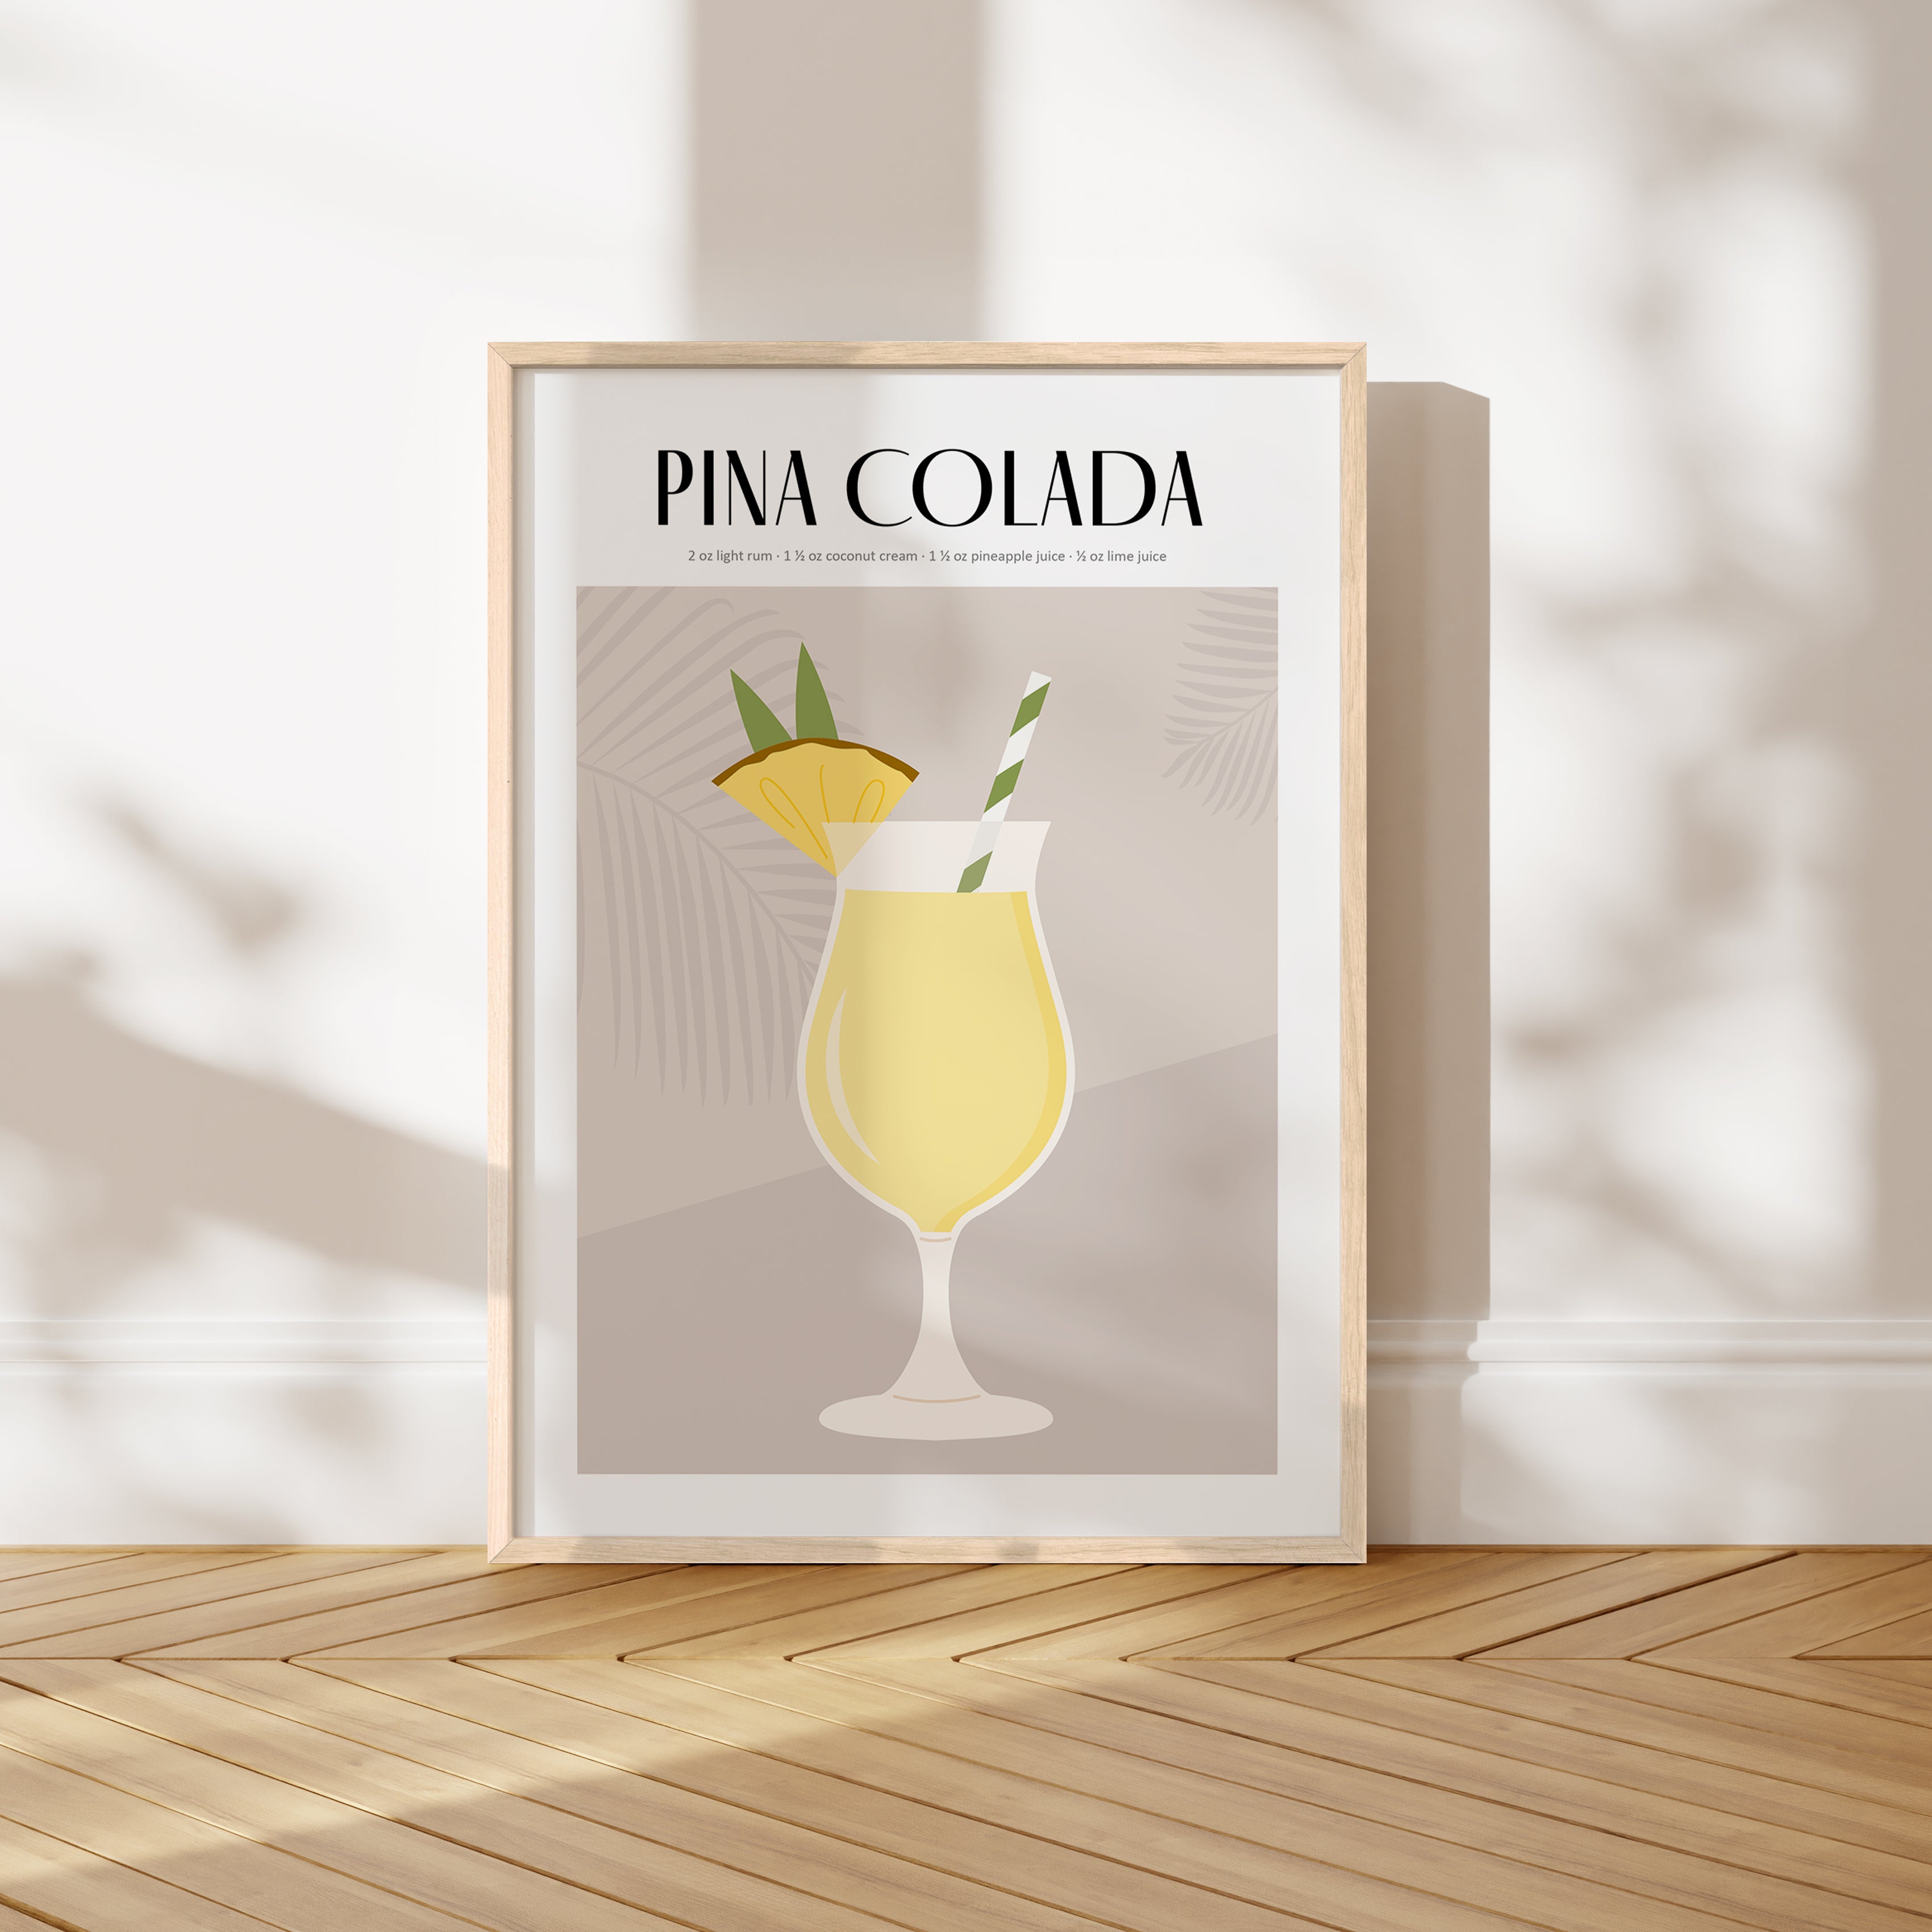 Pina Colada Poster